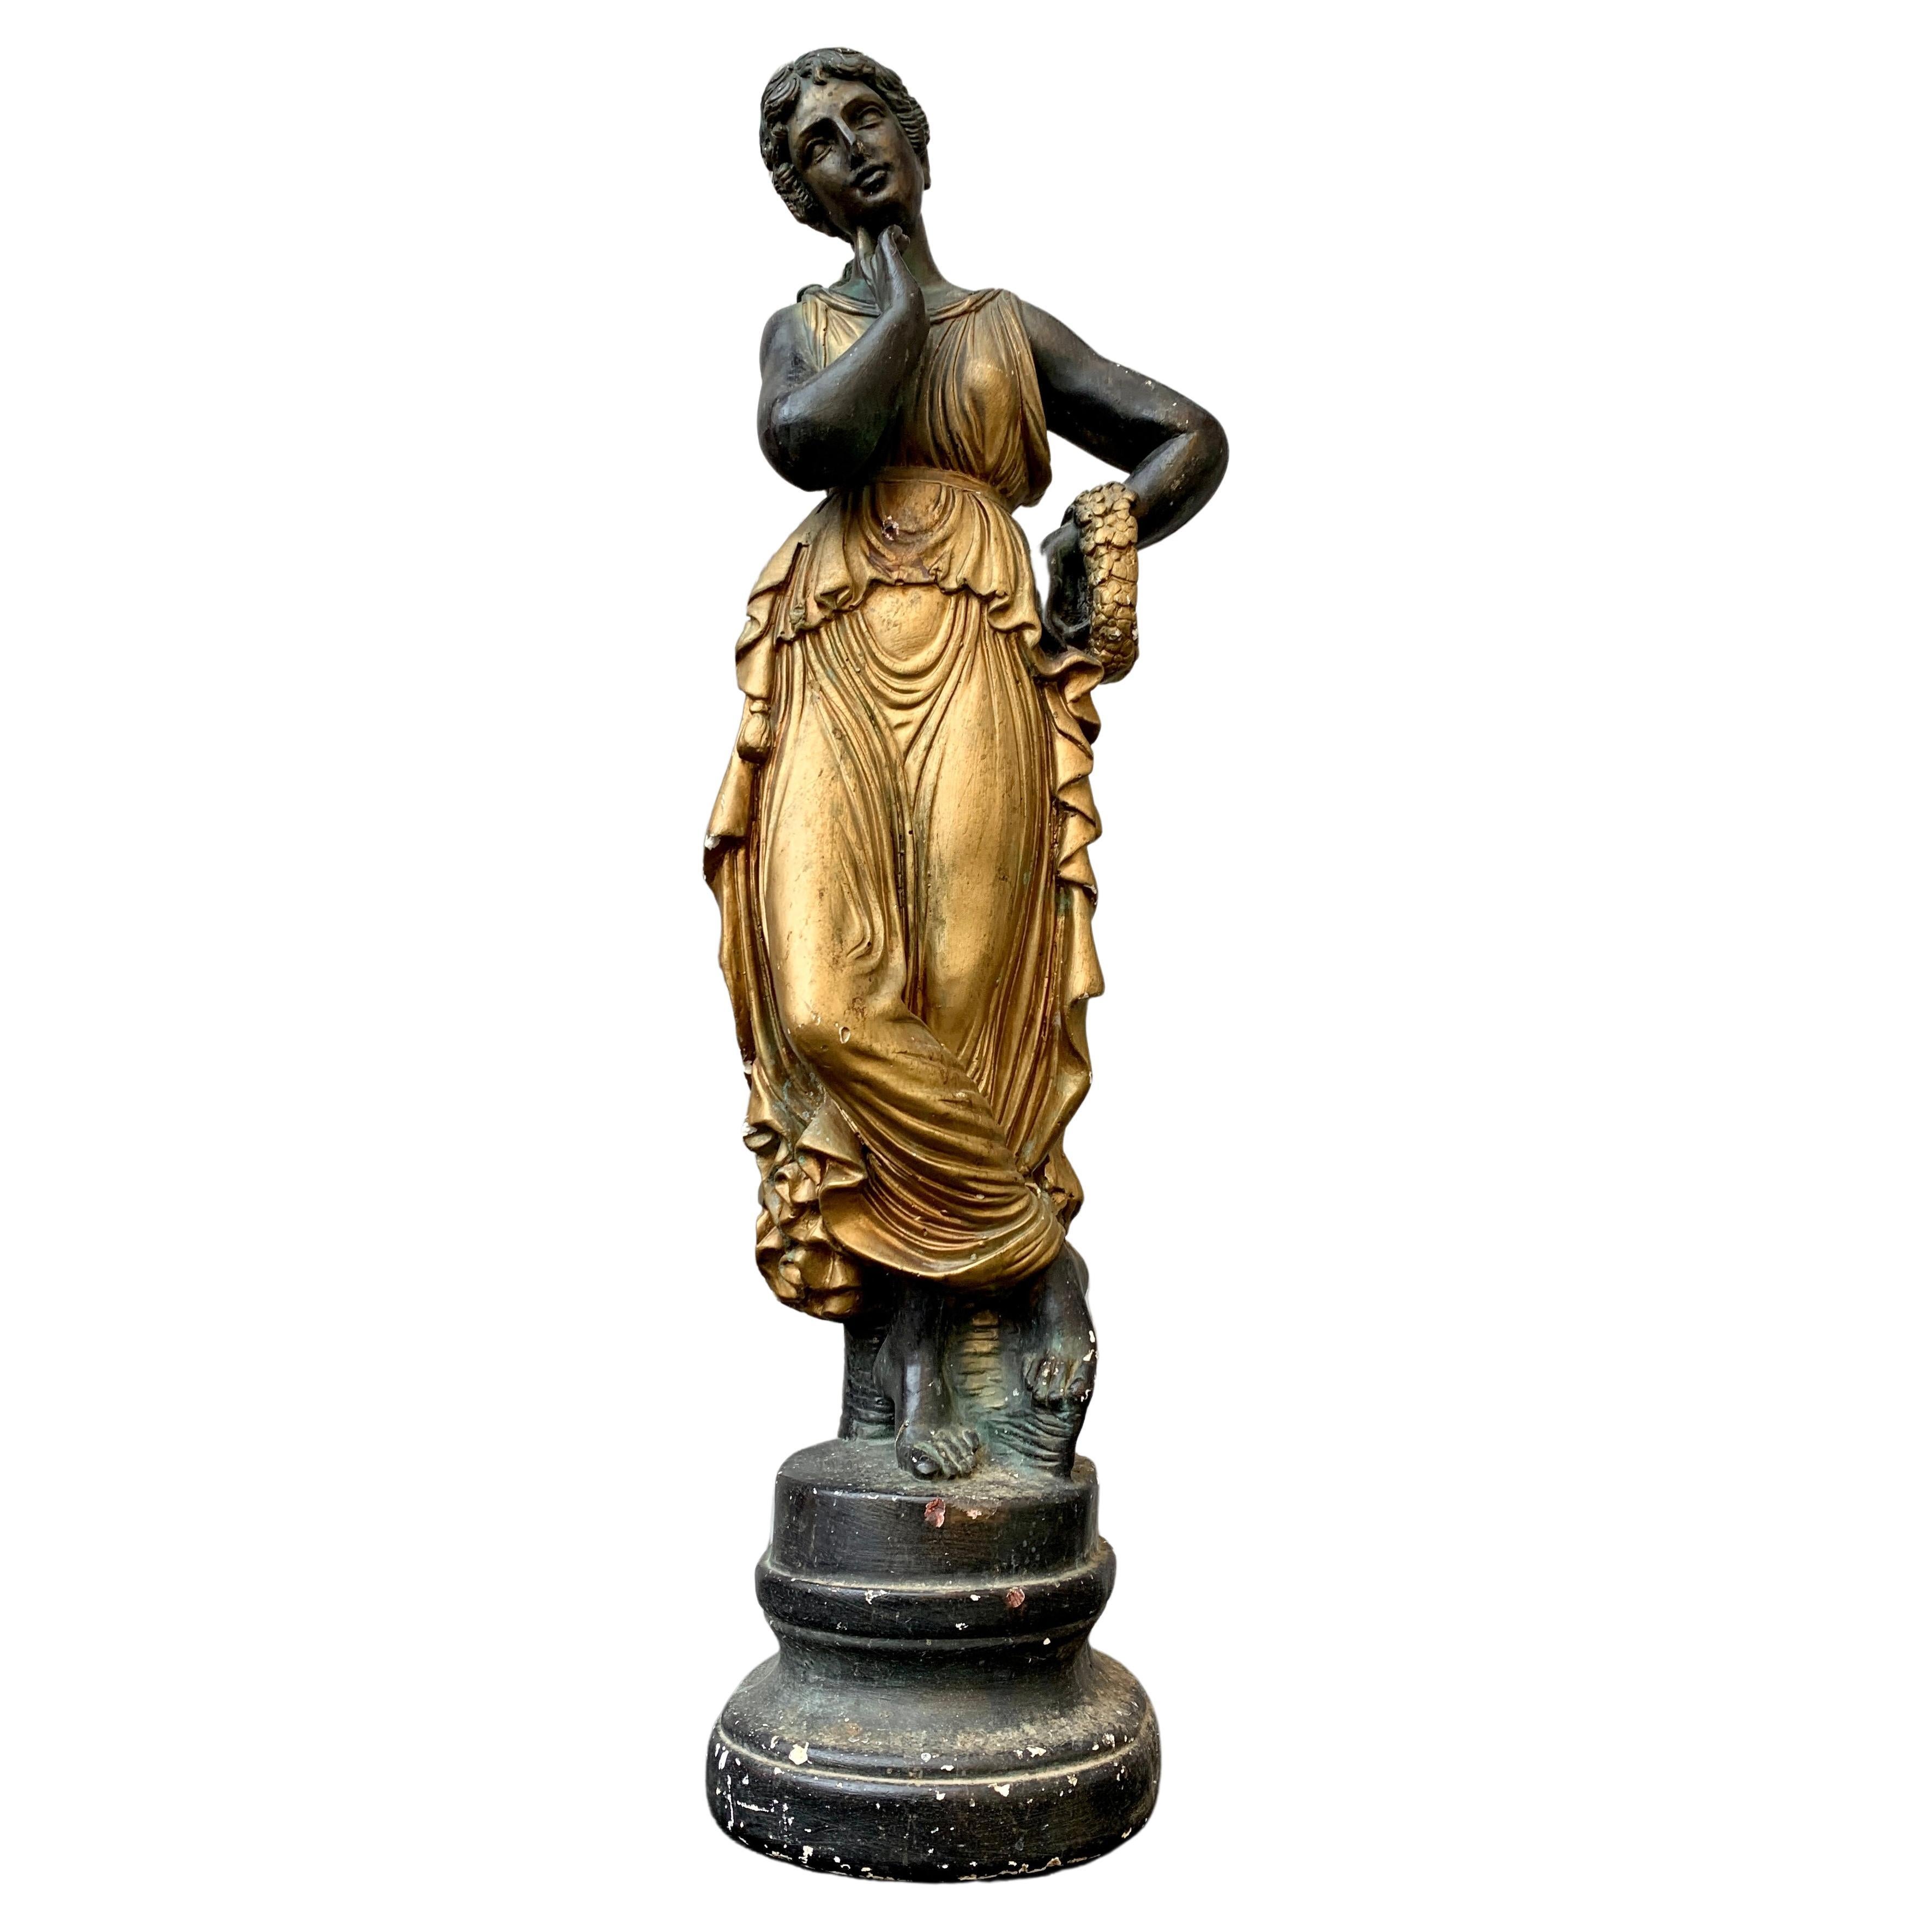 19th Century Polychrome Sculpture of a Roman Woman